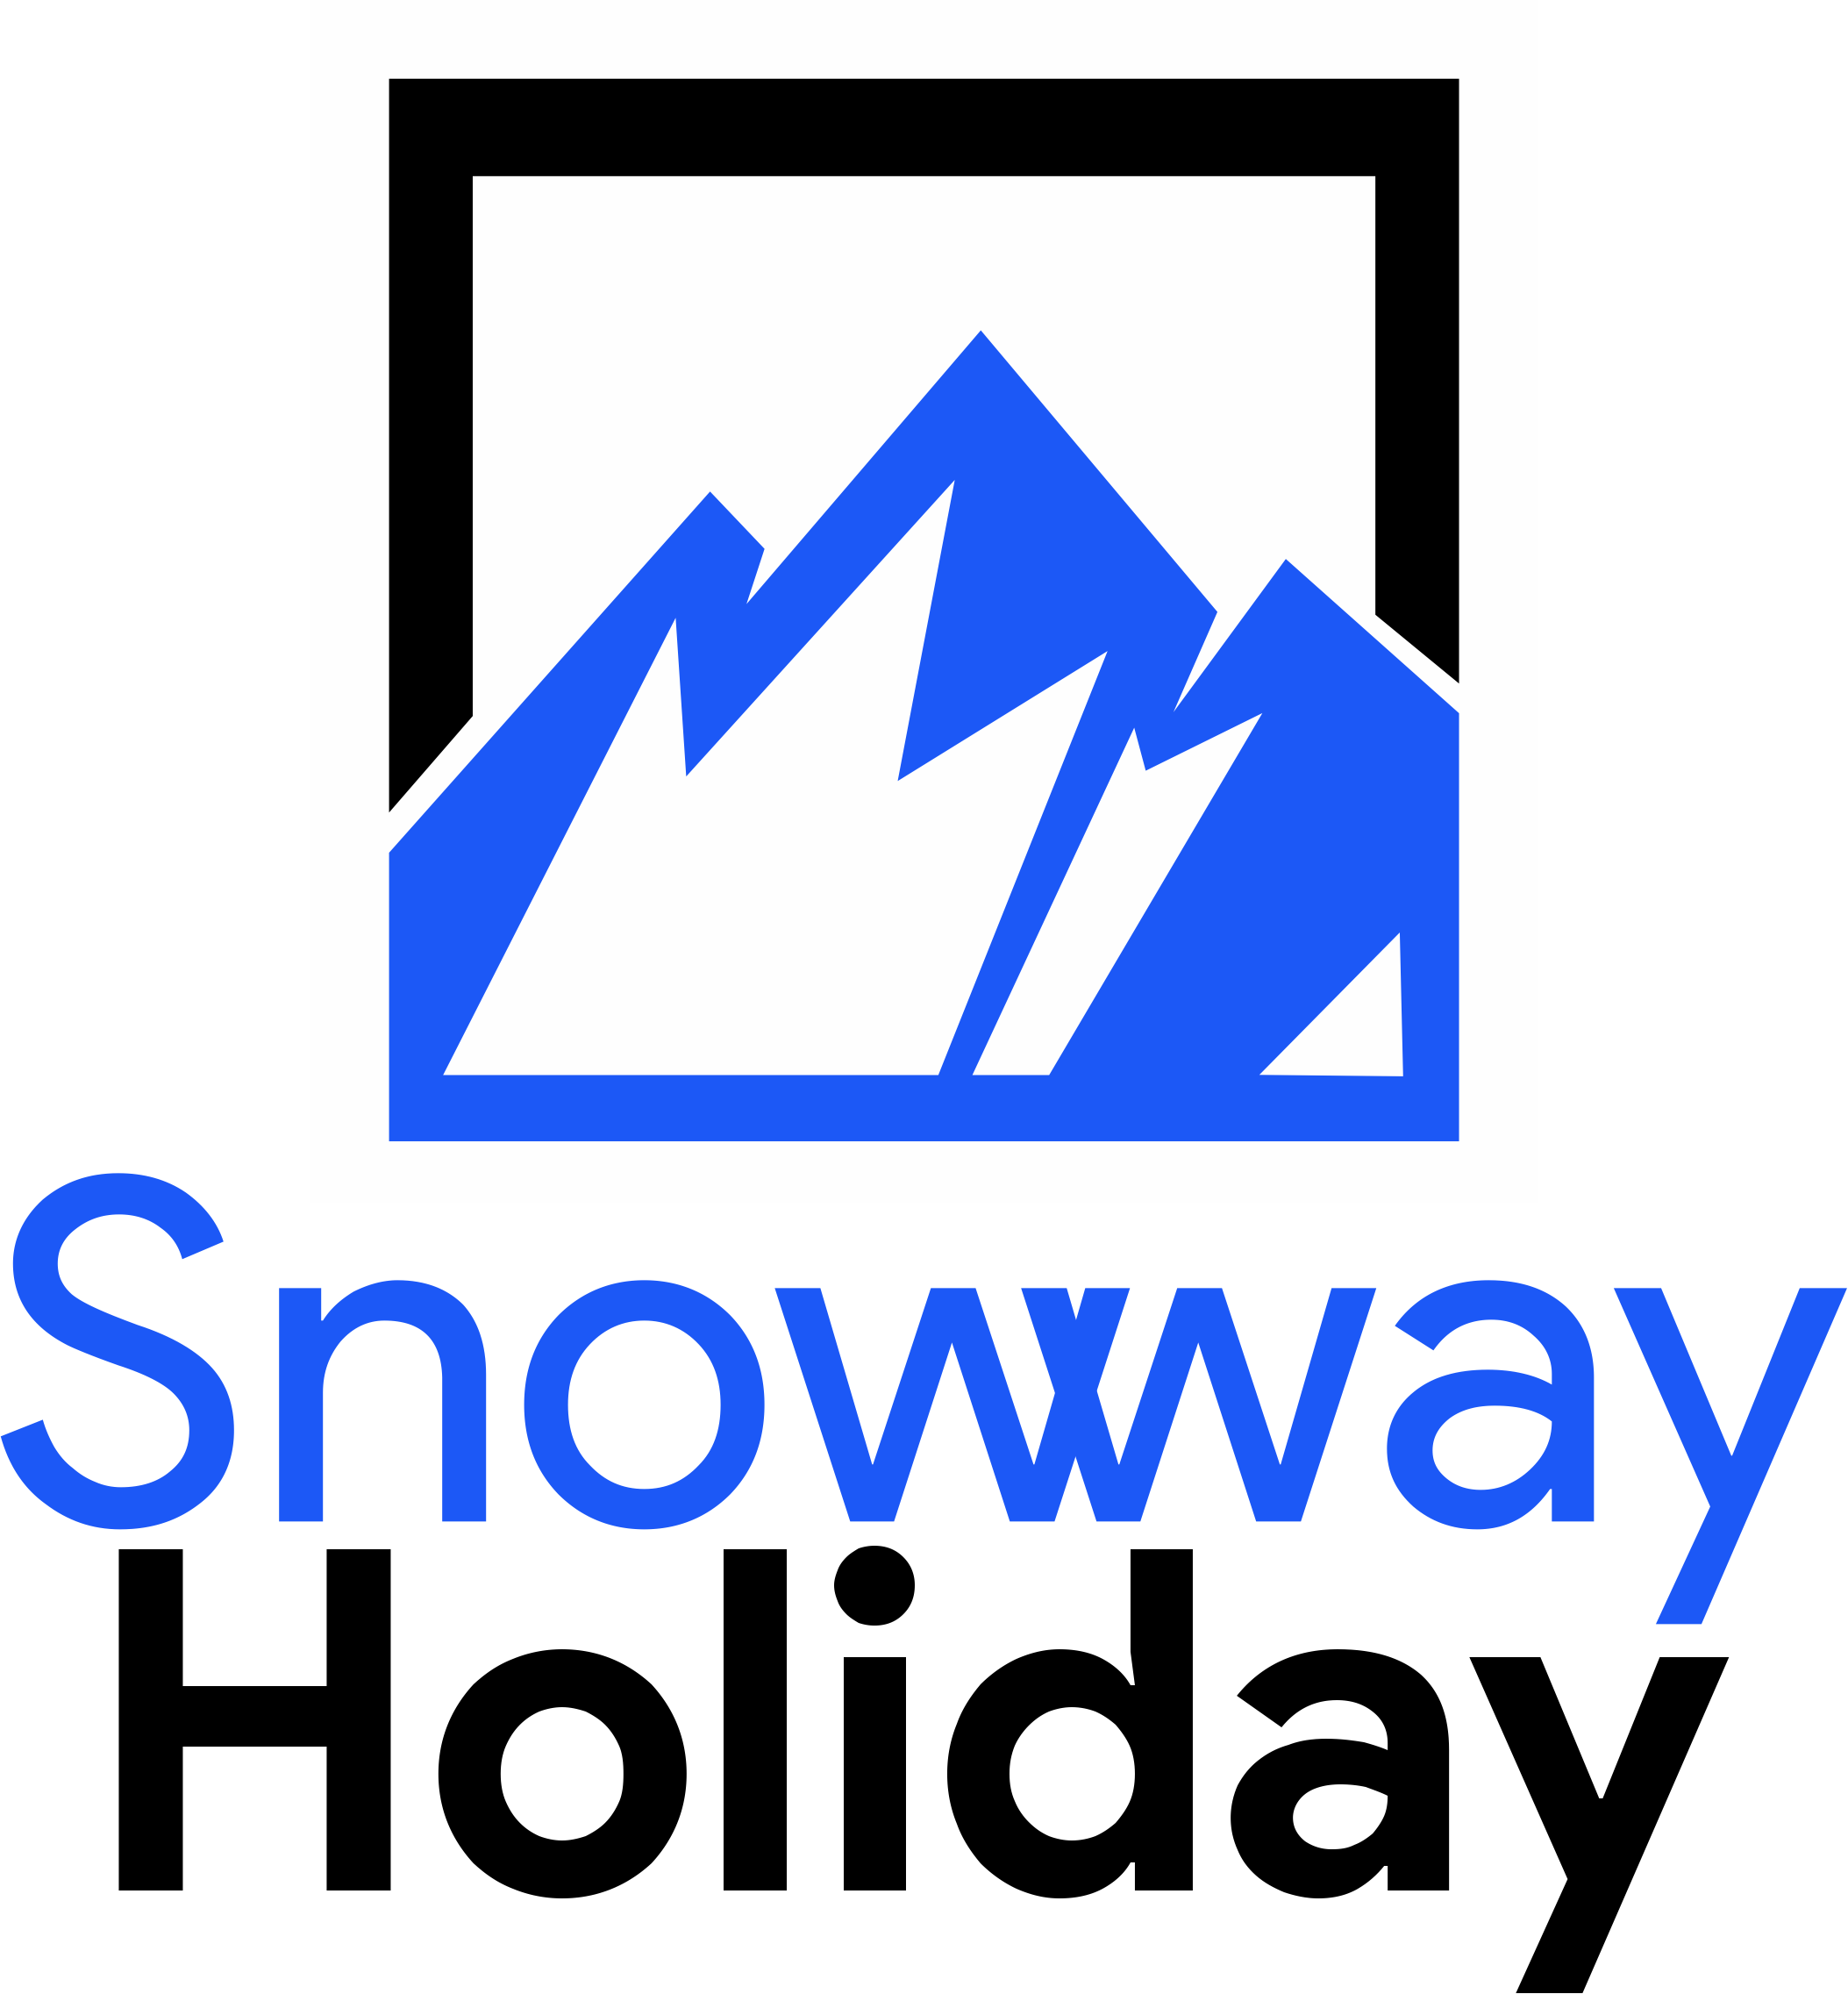 Snowway Holiday